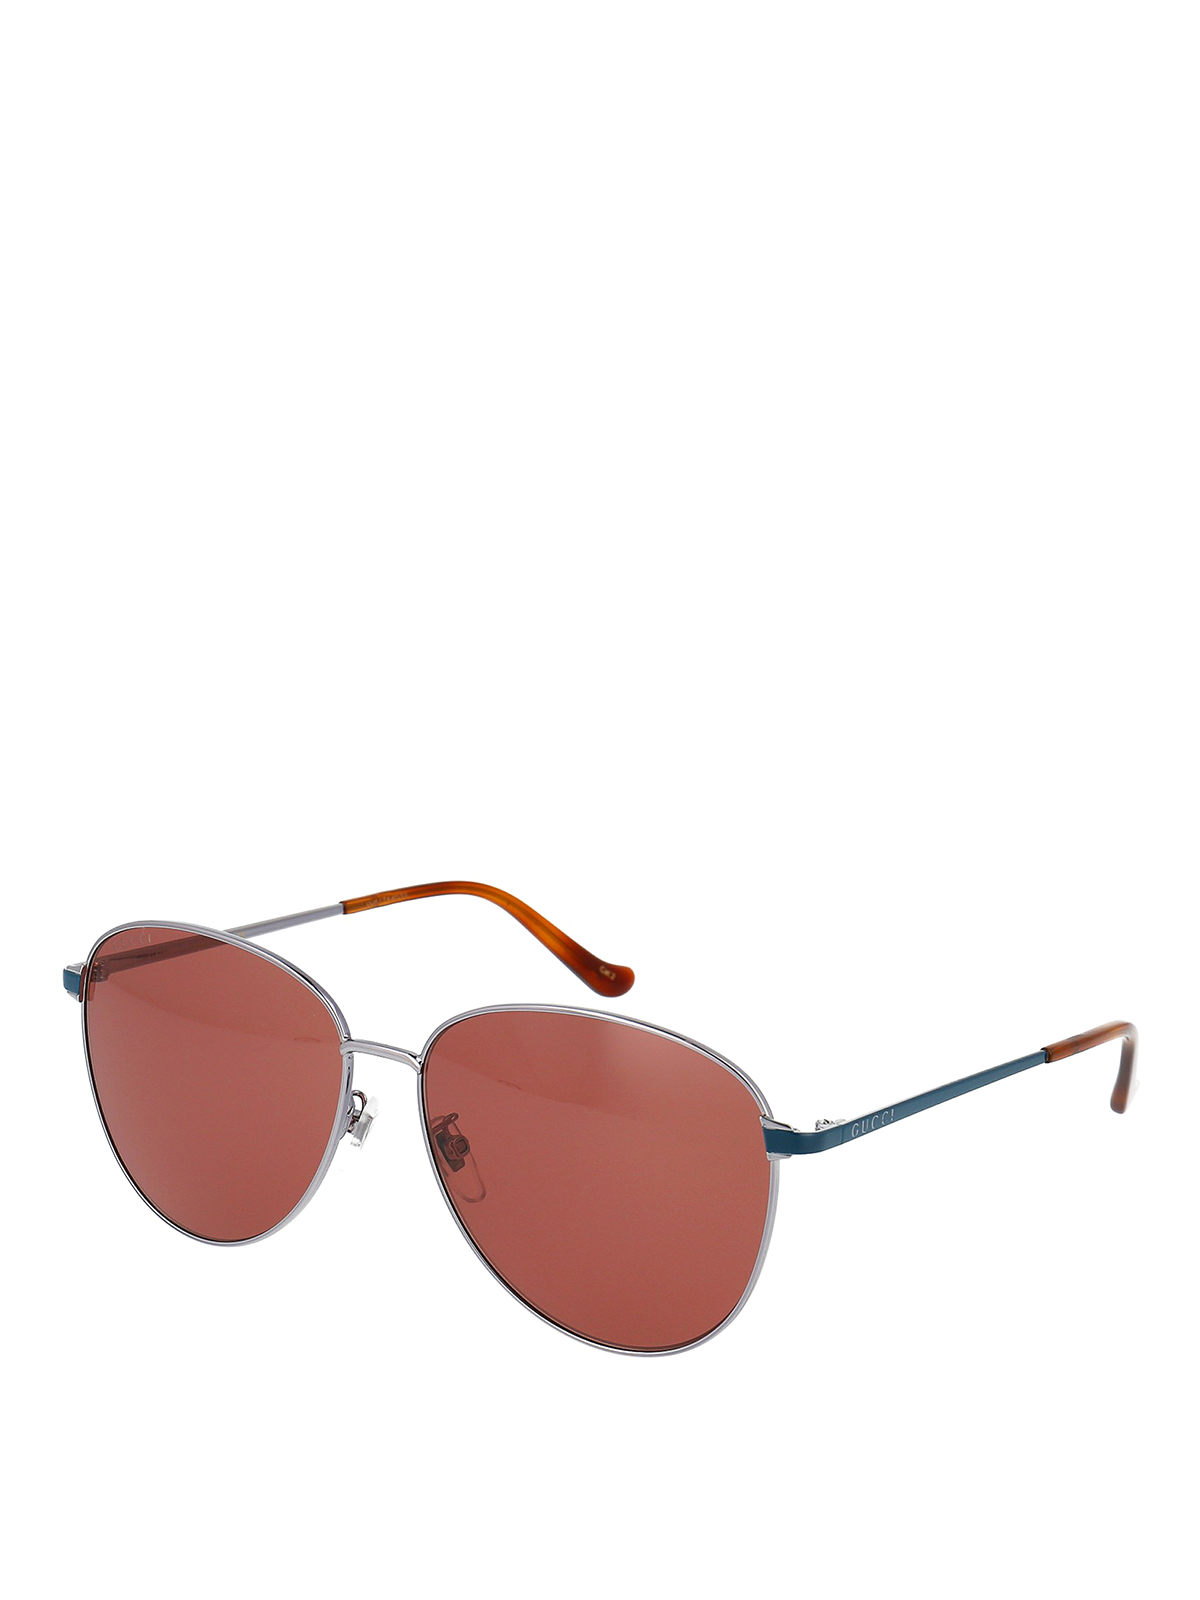 Gucci - Red lens aviator sunglasses 